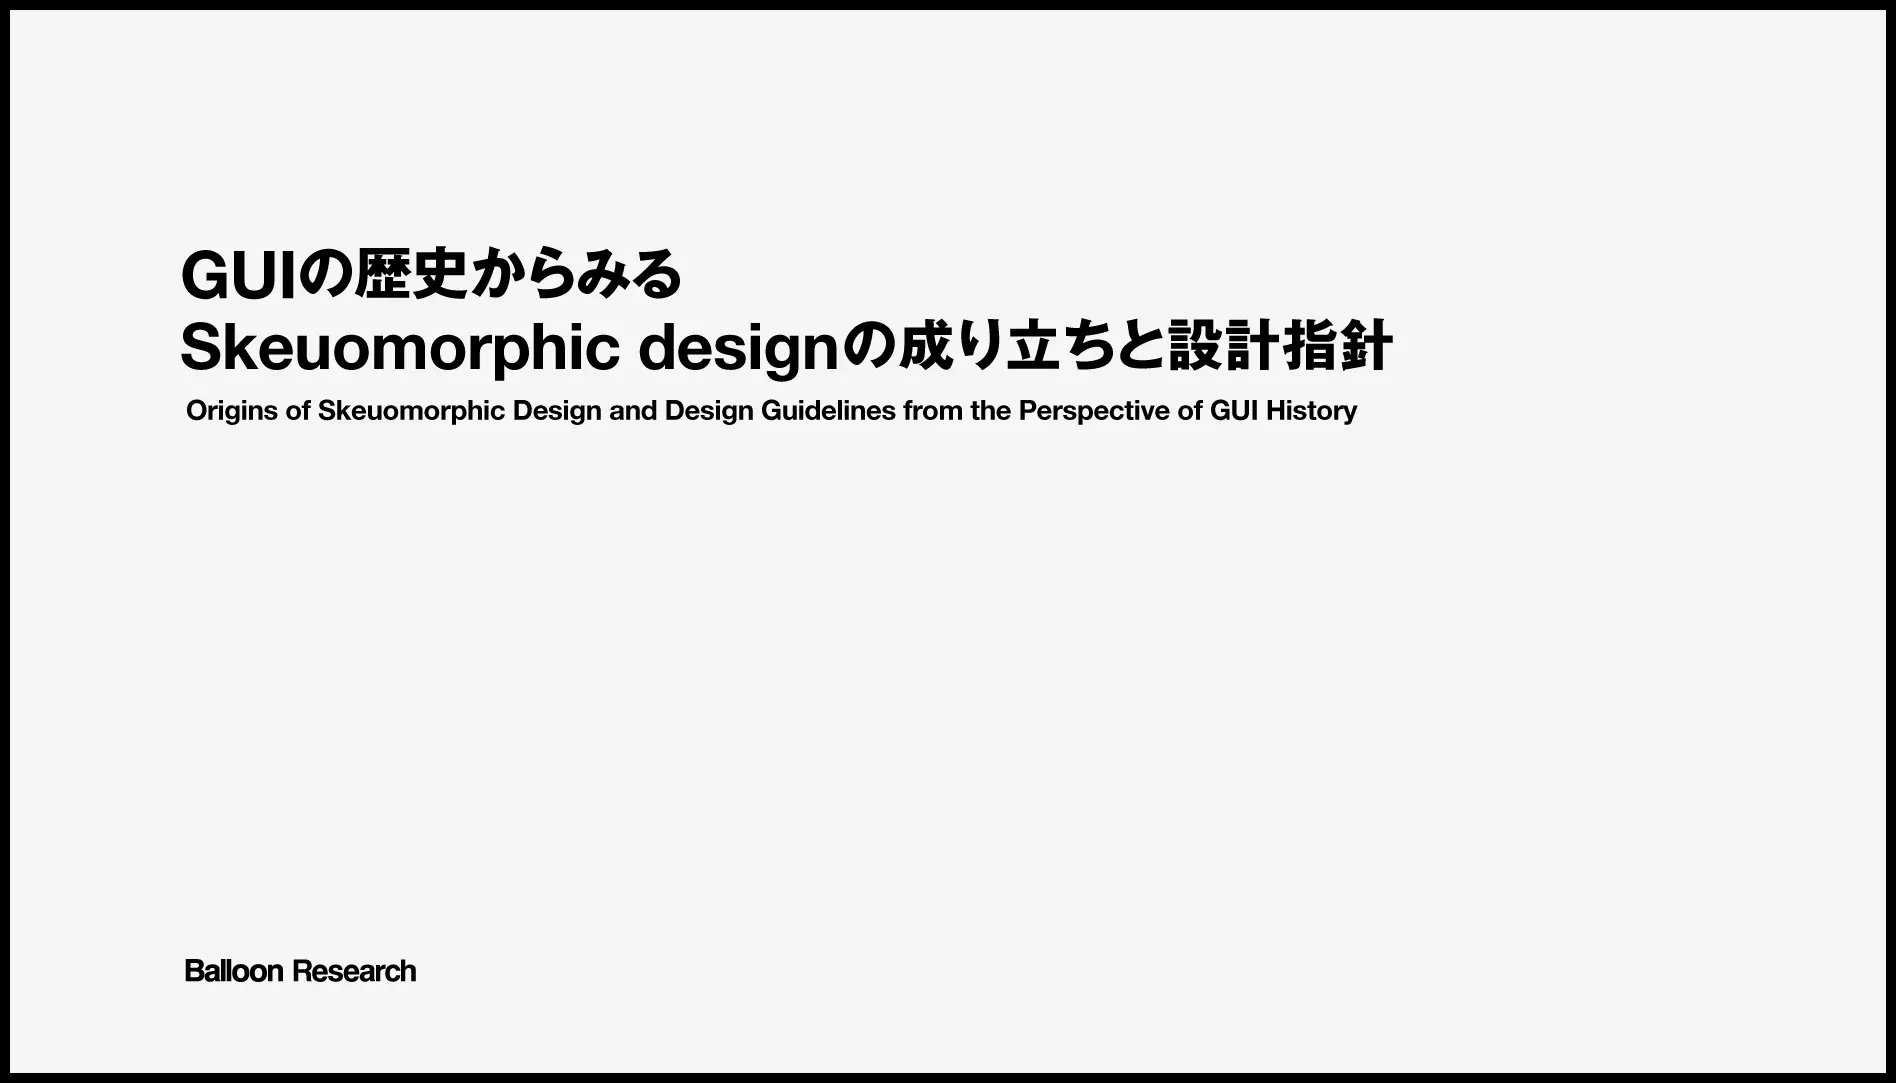 GUIの歴史からみるSkeuomorphic design（スキュアモーフィックデザイン）の成り立ちと設計指針